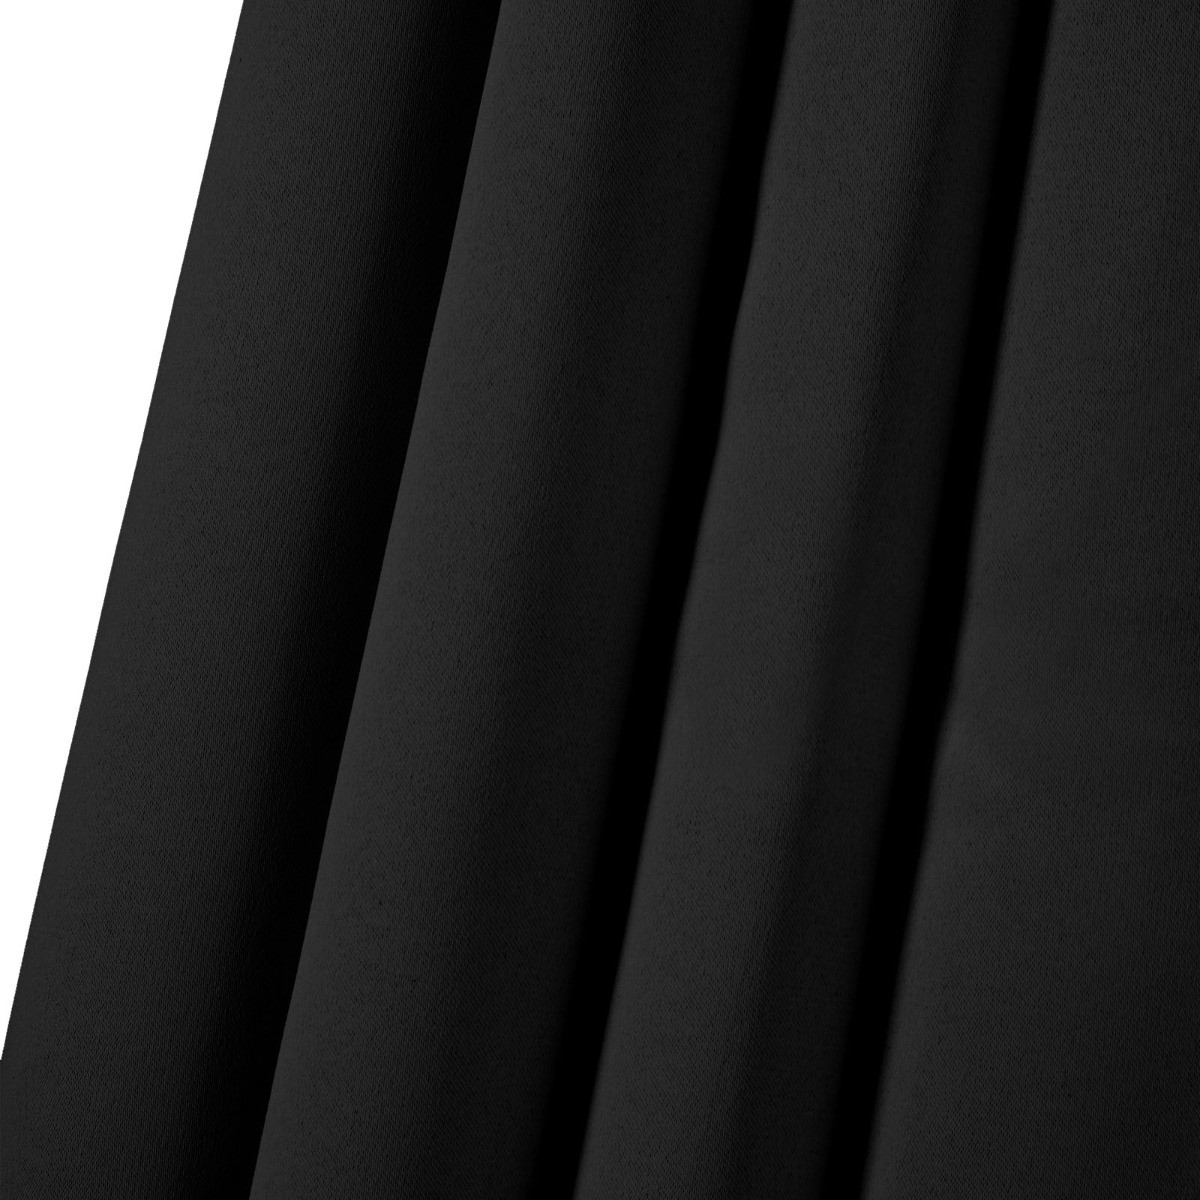 Dreamscene Eyelet Blackout Curtains - Black, 66" X 84">